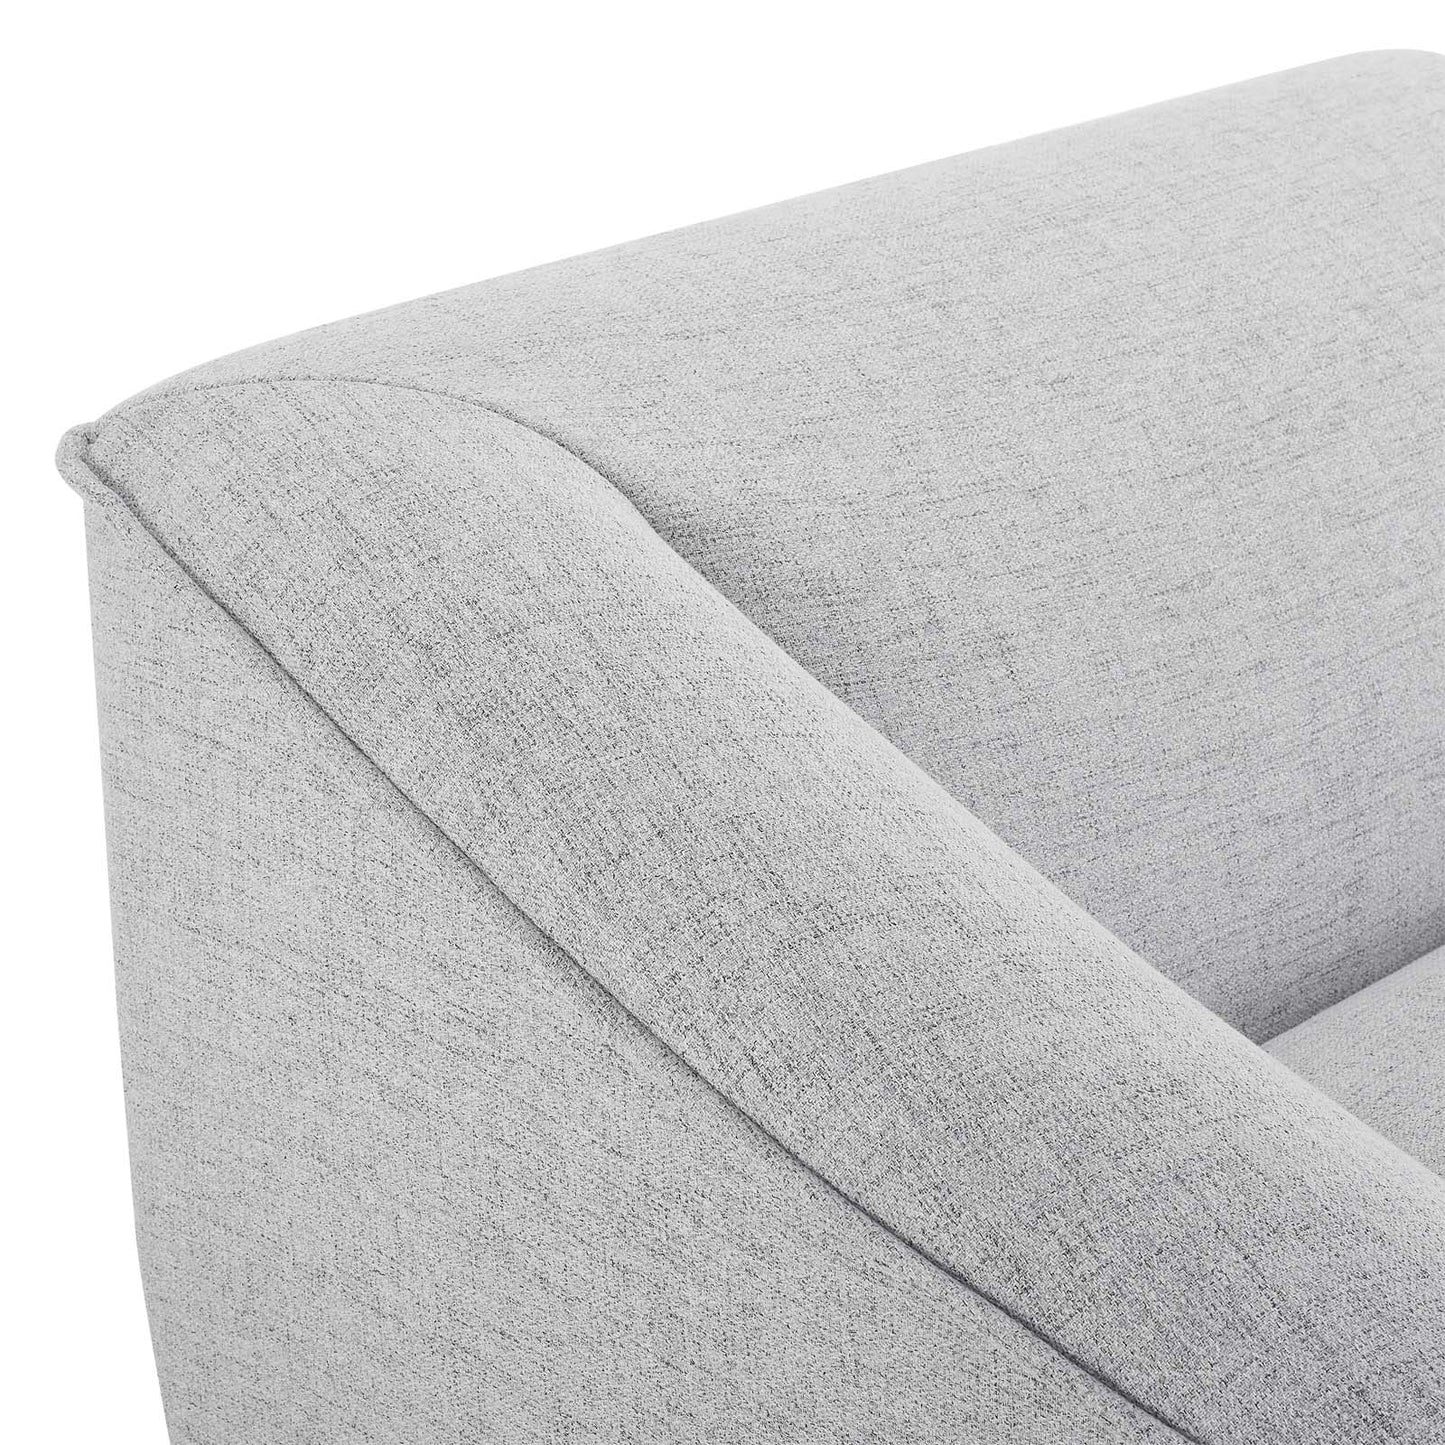 Comprise Left-Arm Sectional Sofa Chair Light Gray EEI-4415-LGR